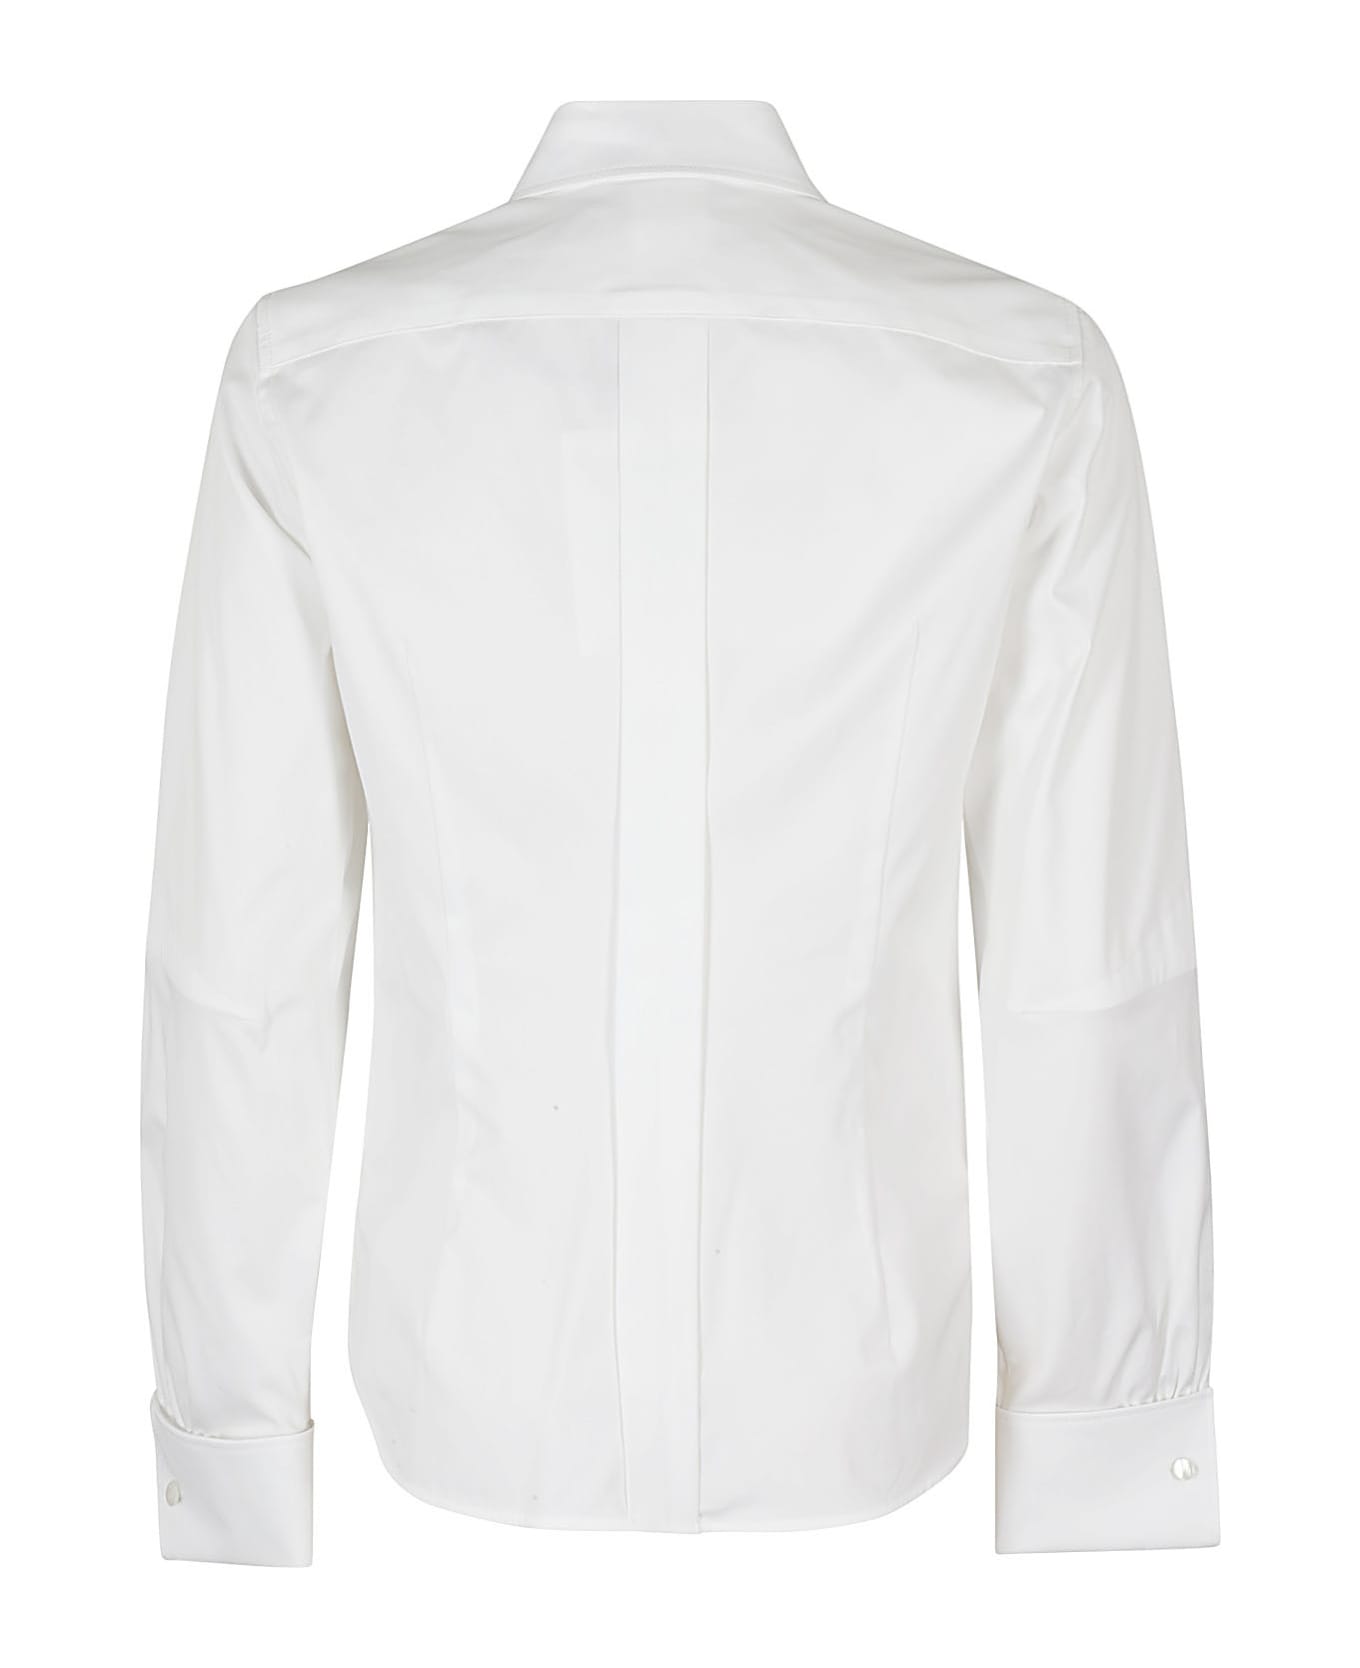 Max Mara Pagina Shirt - Bianco Ottico